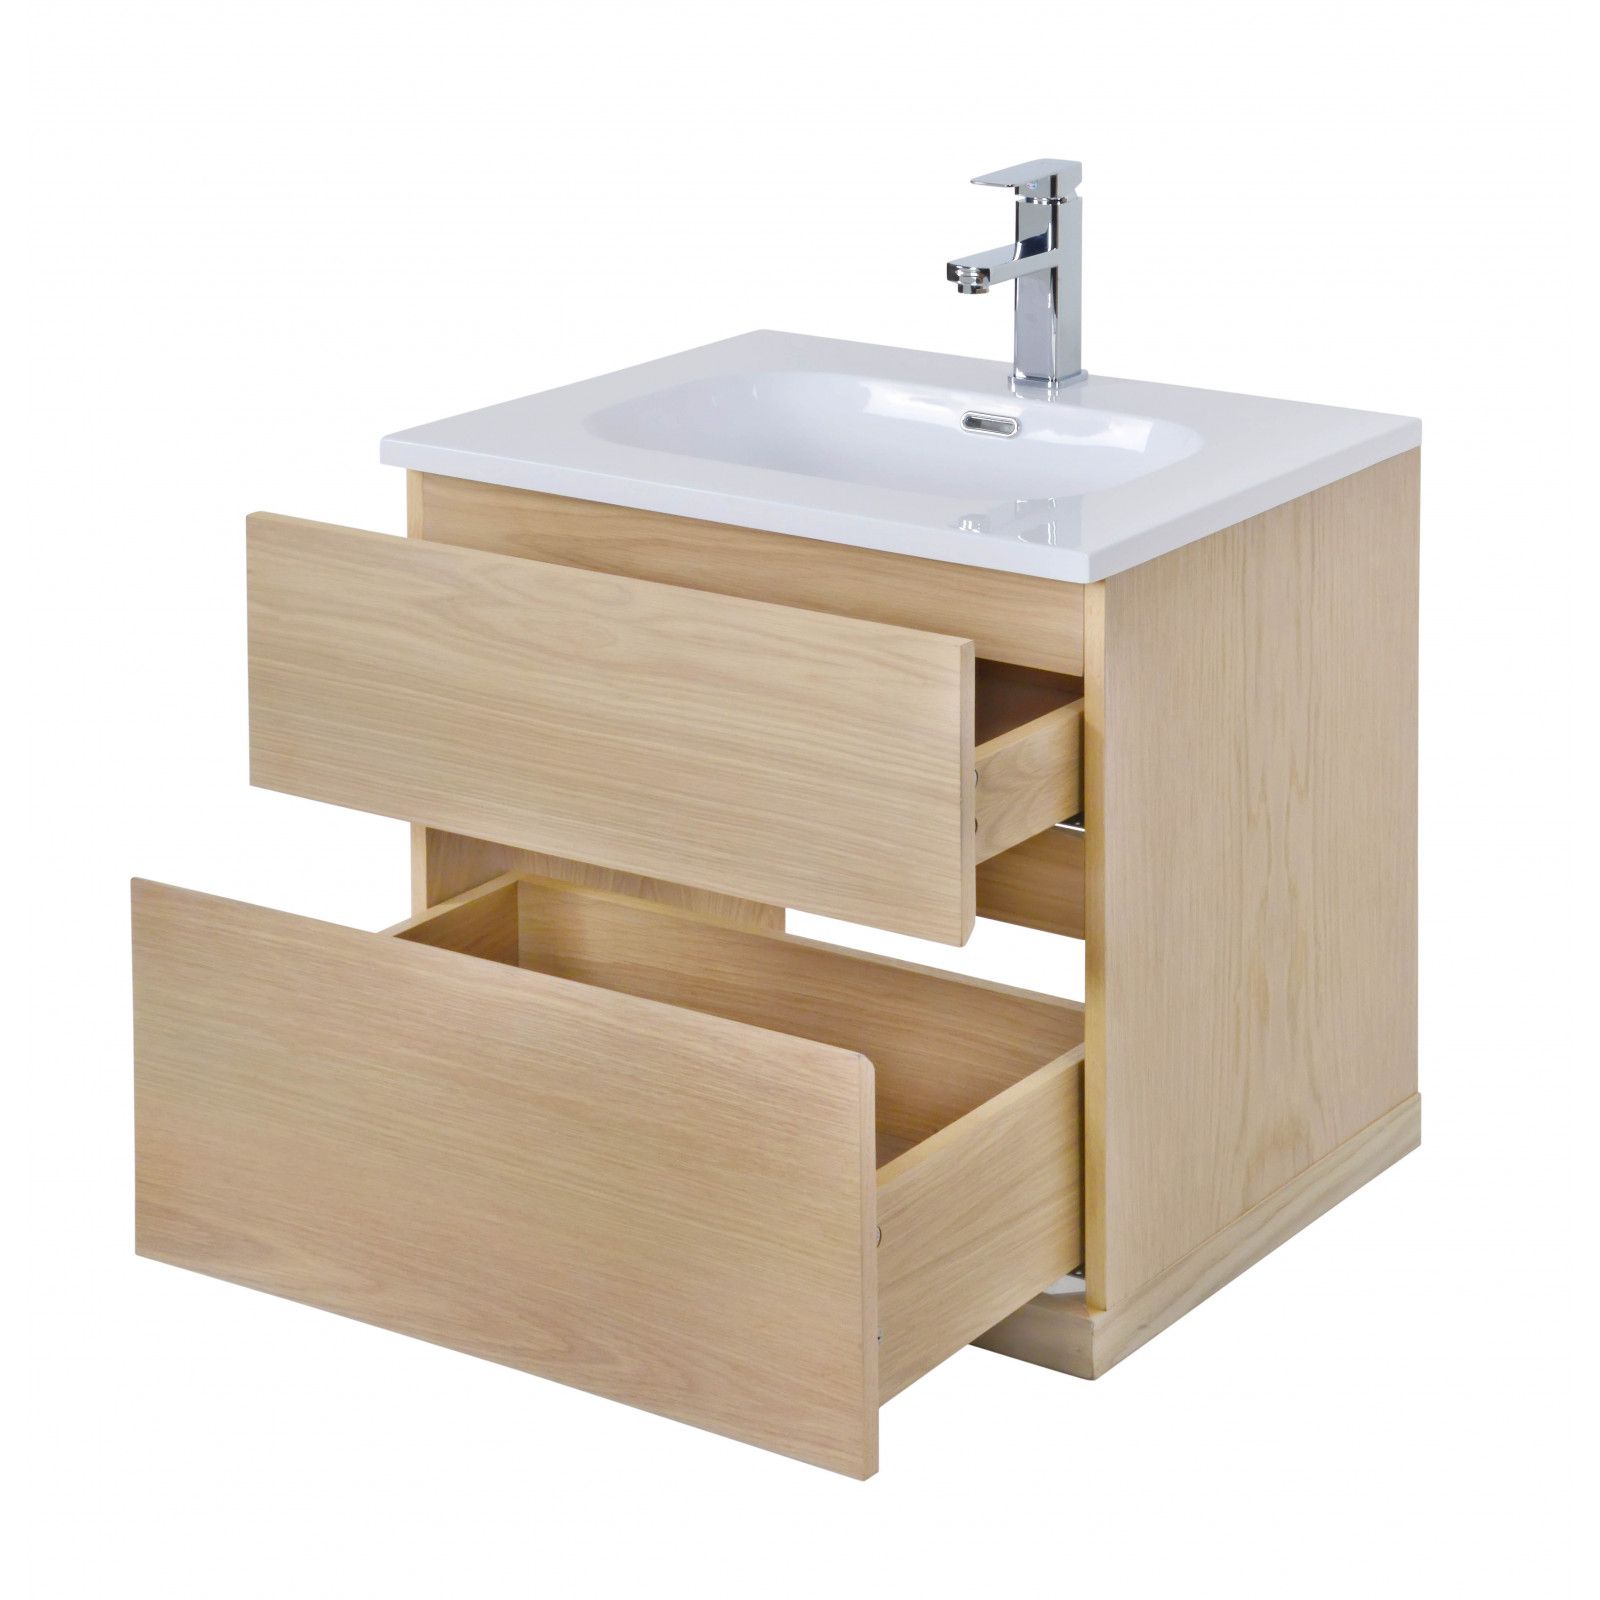 Ensemble salle de bain chêne 2 meubles 60 cm + 2 miroirs + 1 module rangement ENIO